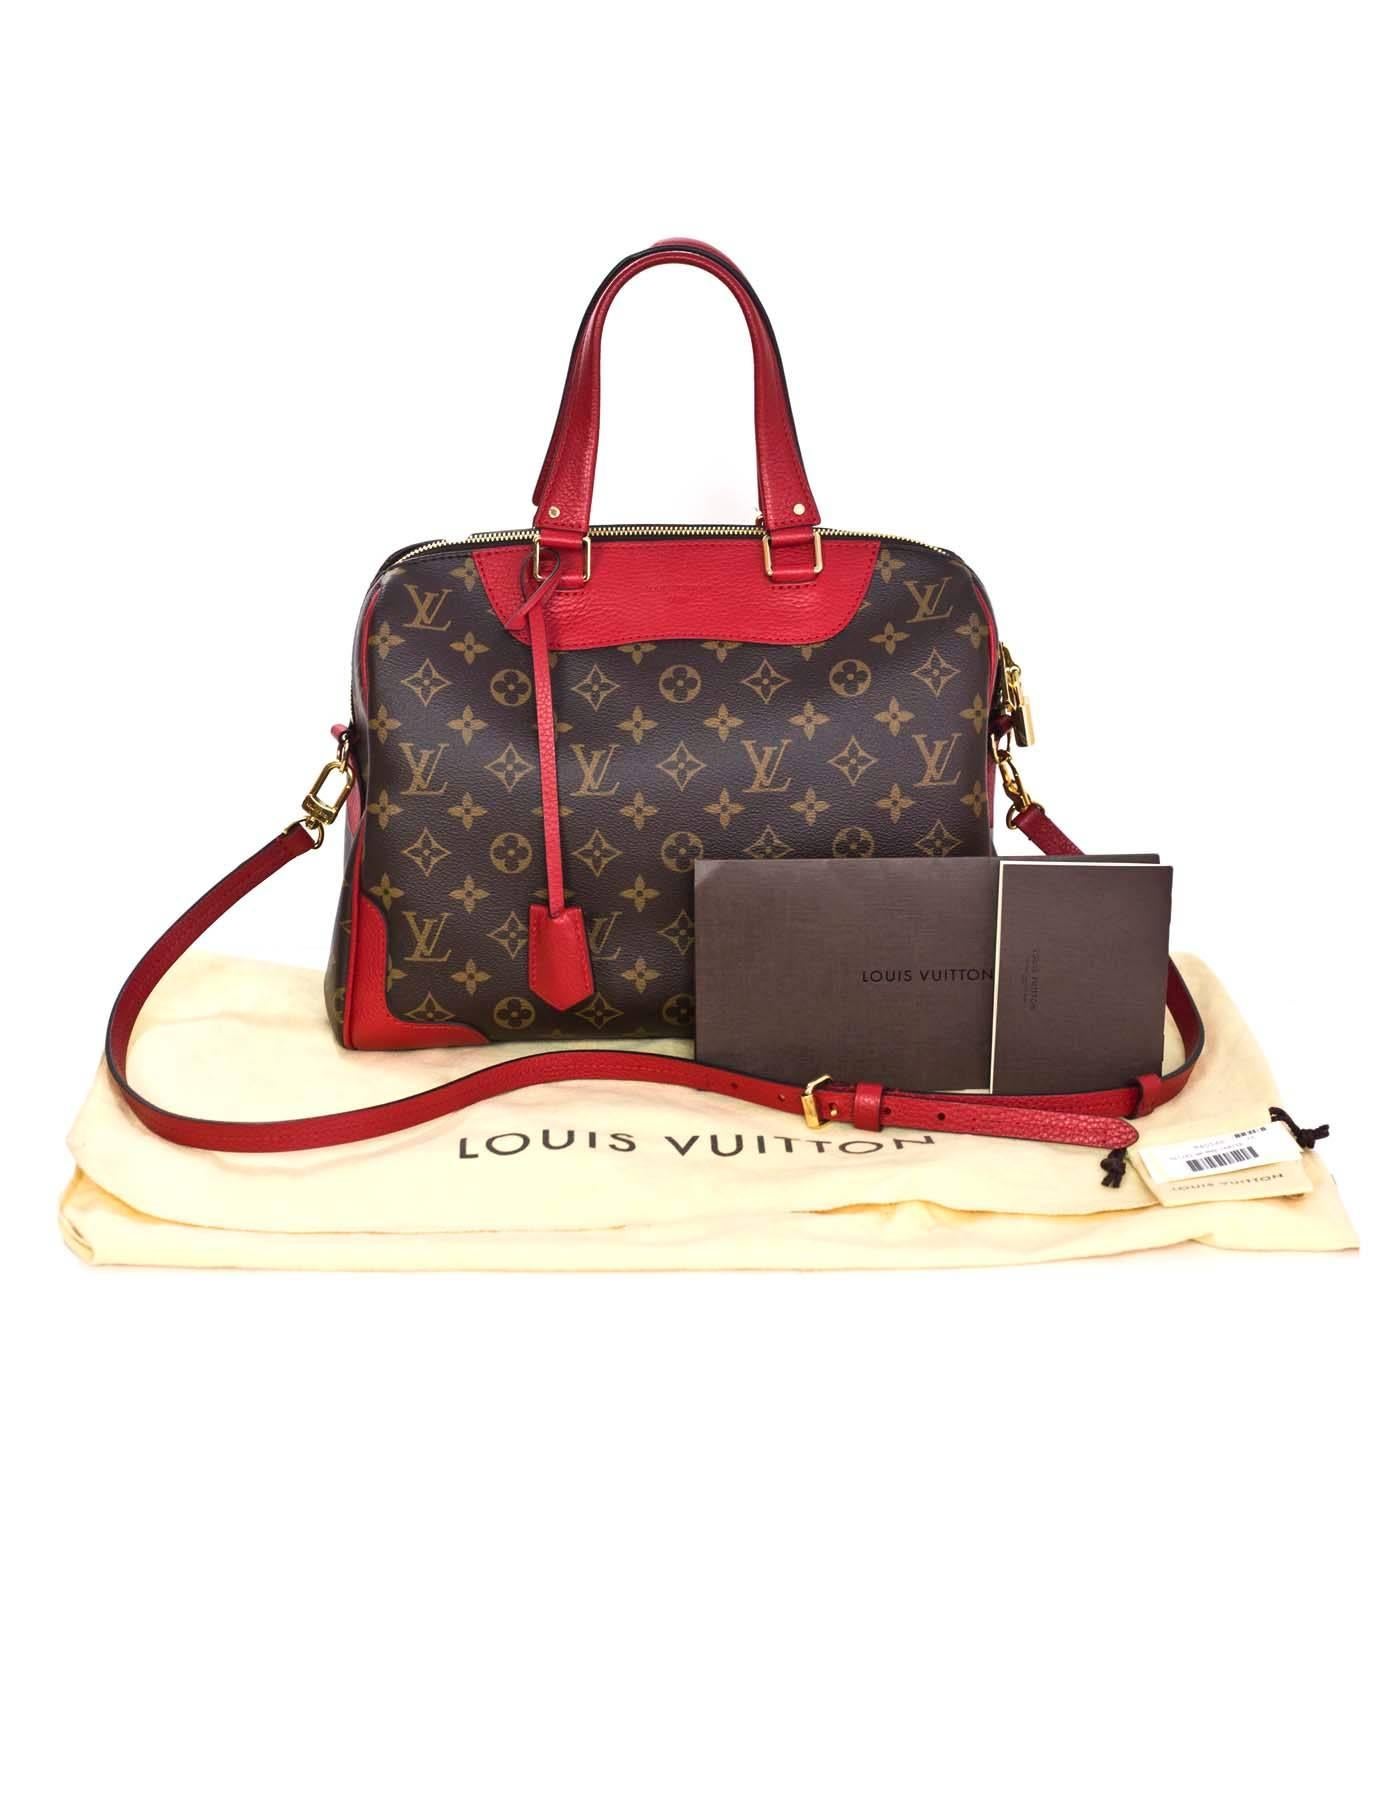 Louis Vuitton Monogram & Cerise Red Leather Retiro Bag w/ Strap 3